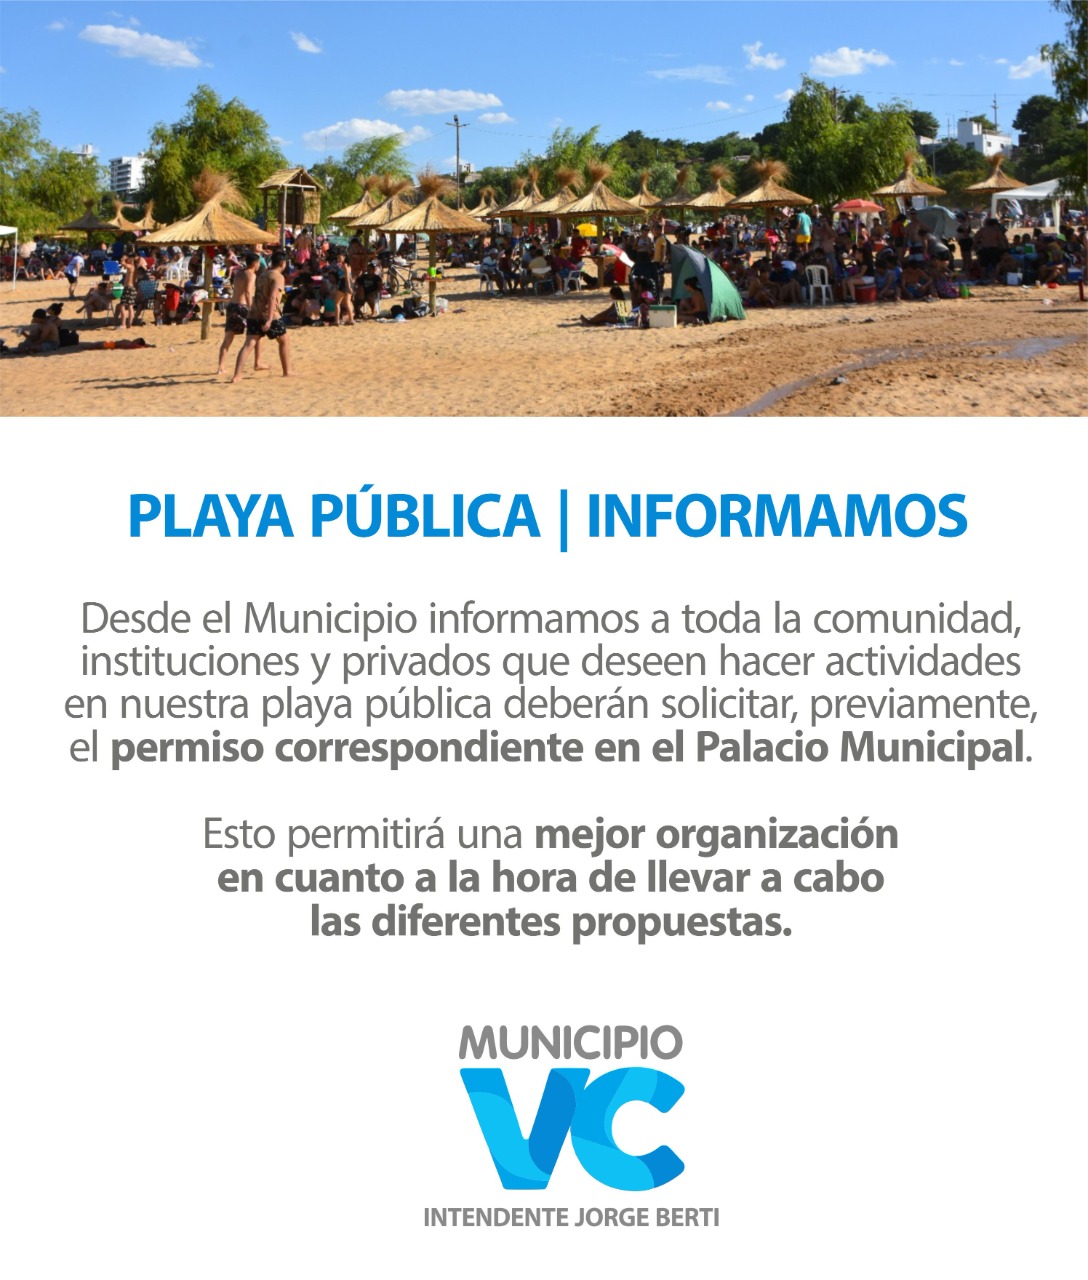 Playa pública | Informamos